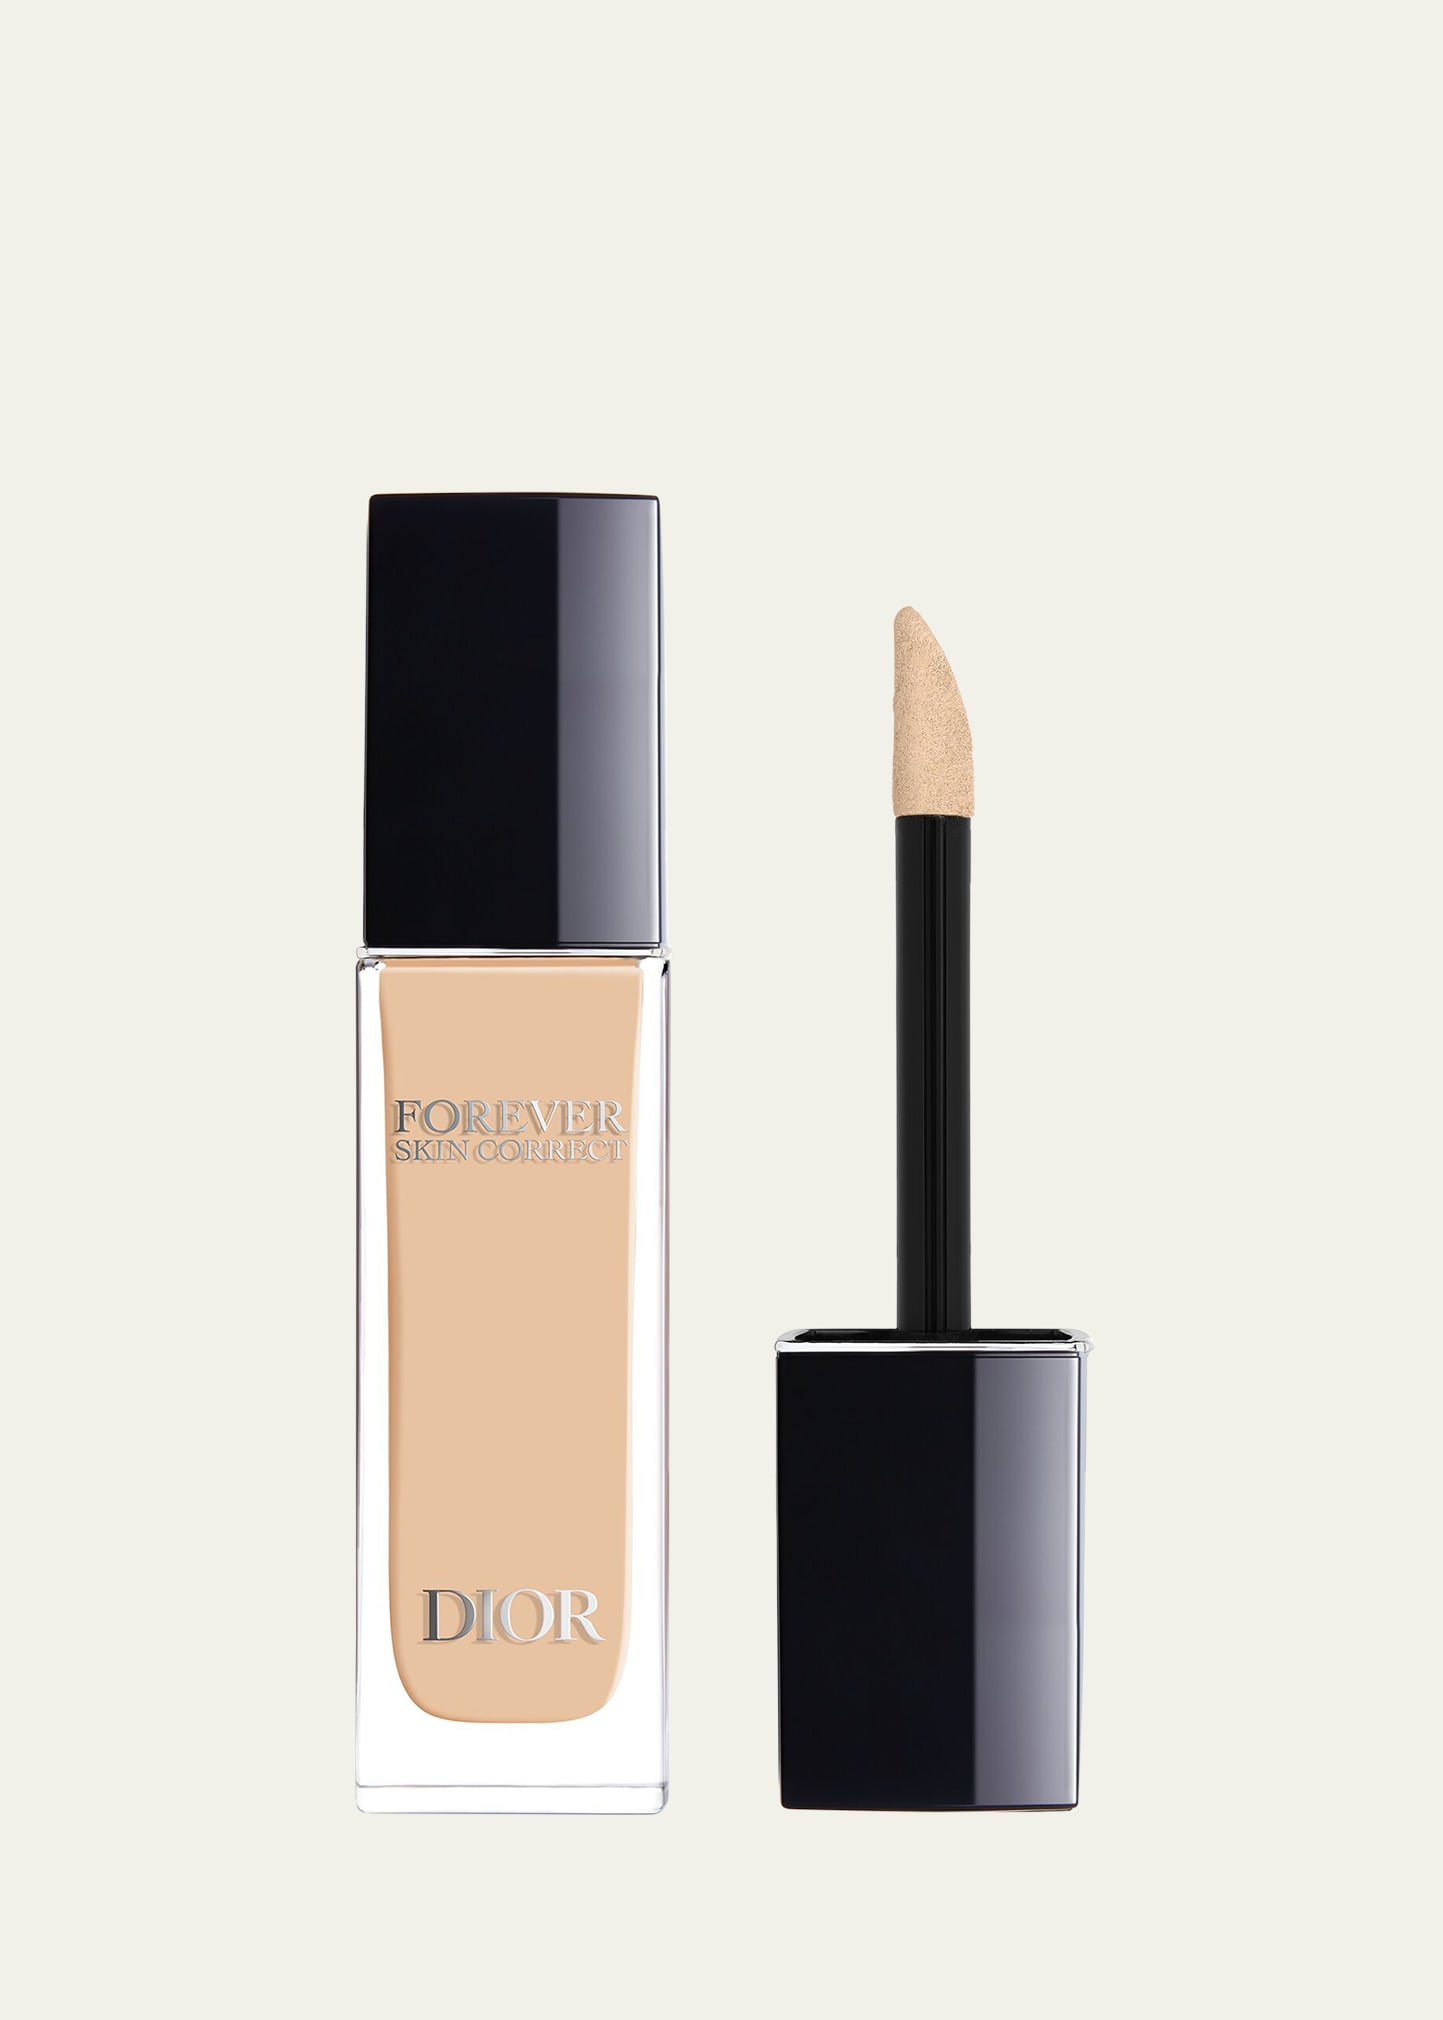 Dior Forever Skin Correct Full-coverage Concealer In 0.5 N Neutral